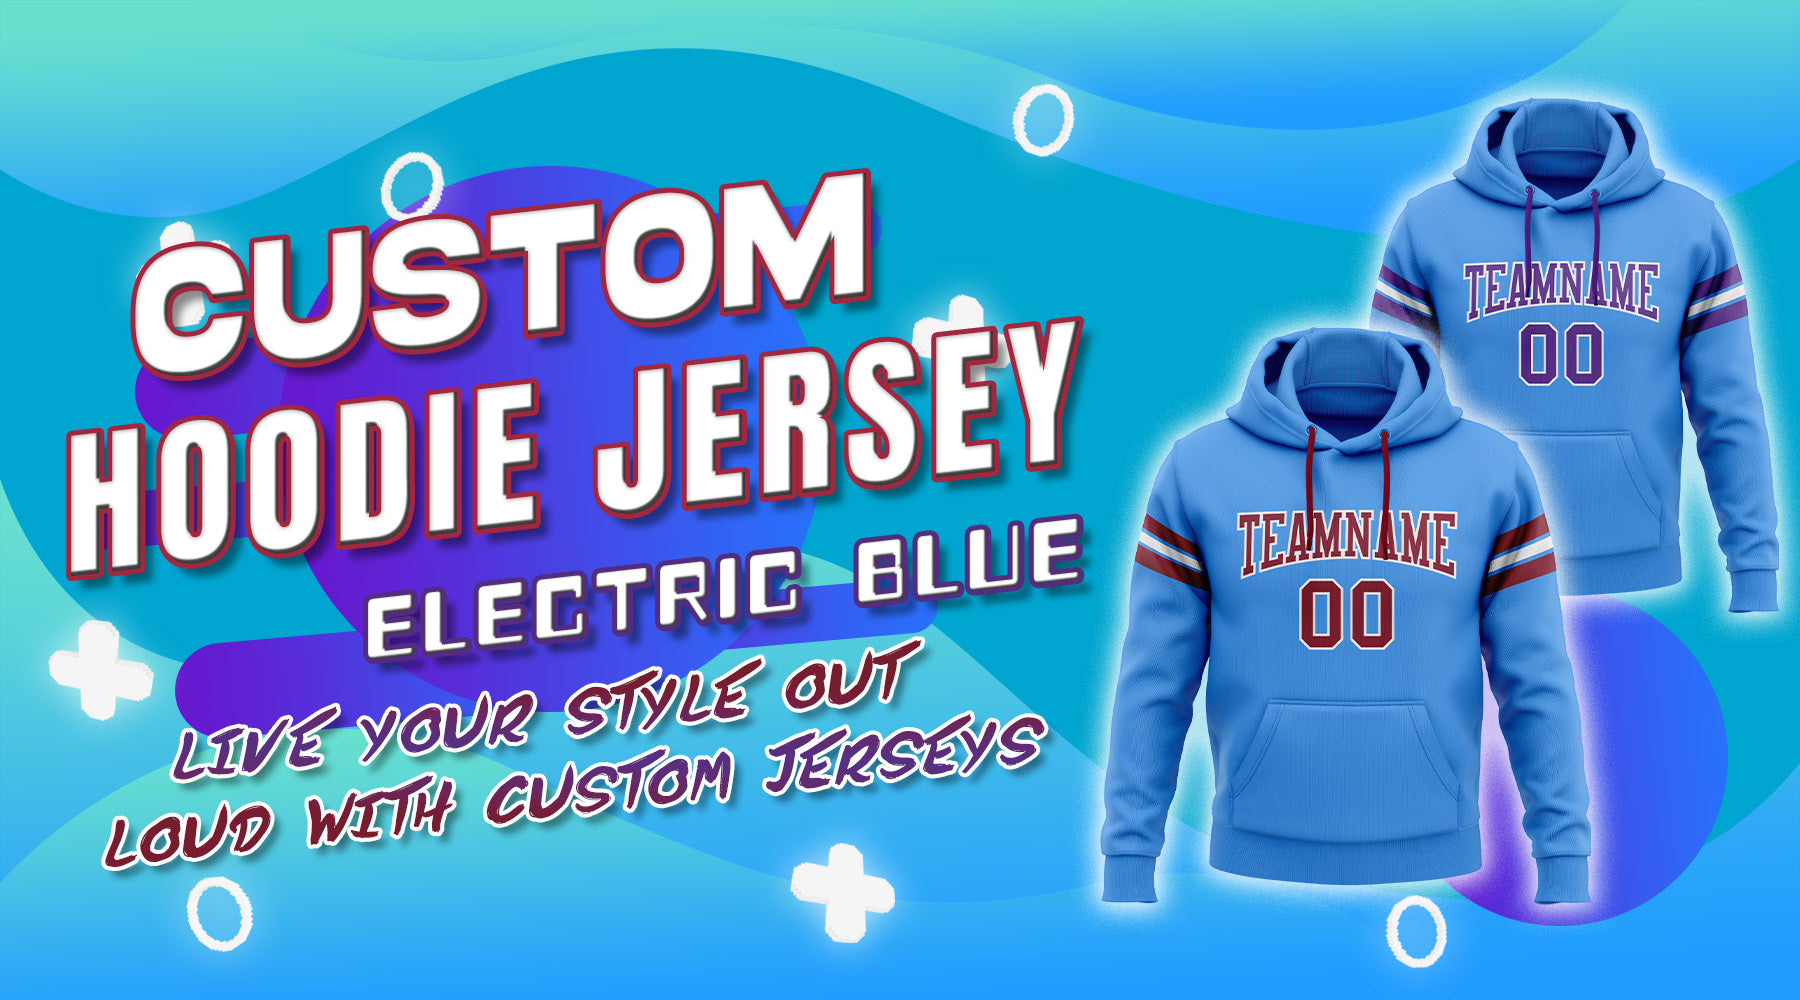 custom hoodie electric blue jersey